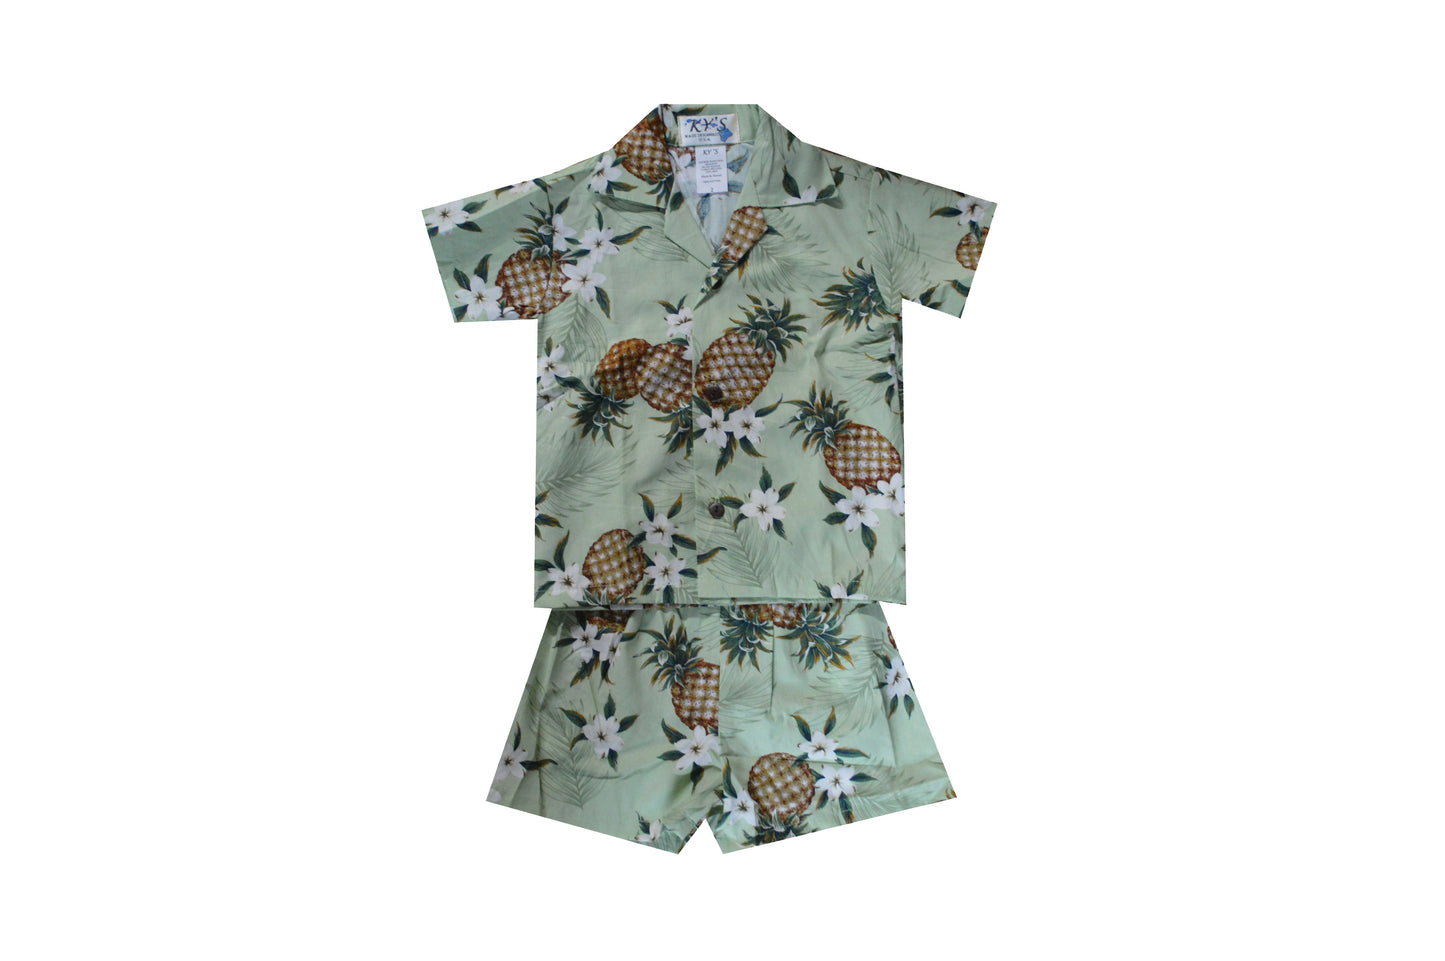 Hawaiian Pineapple Boy Shirts and Little Boy Cabana Sets